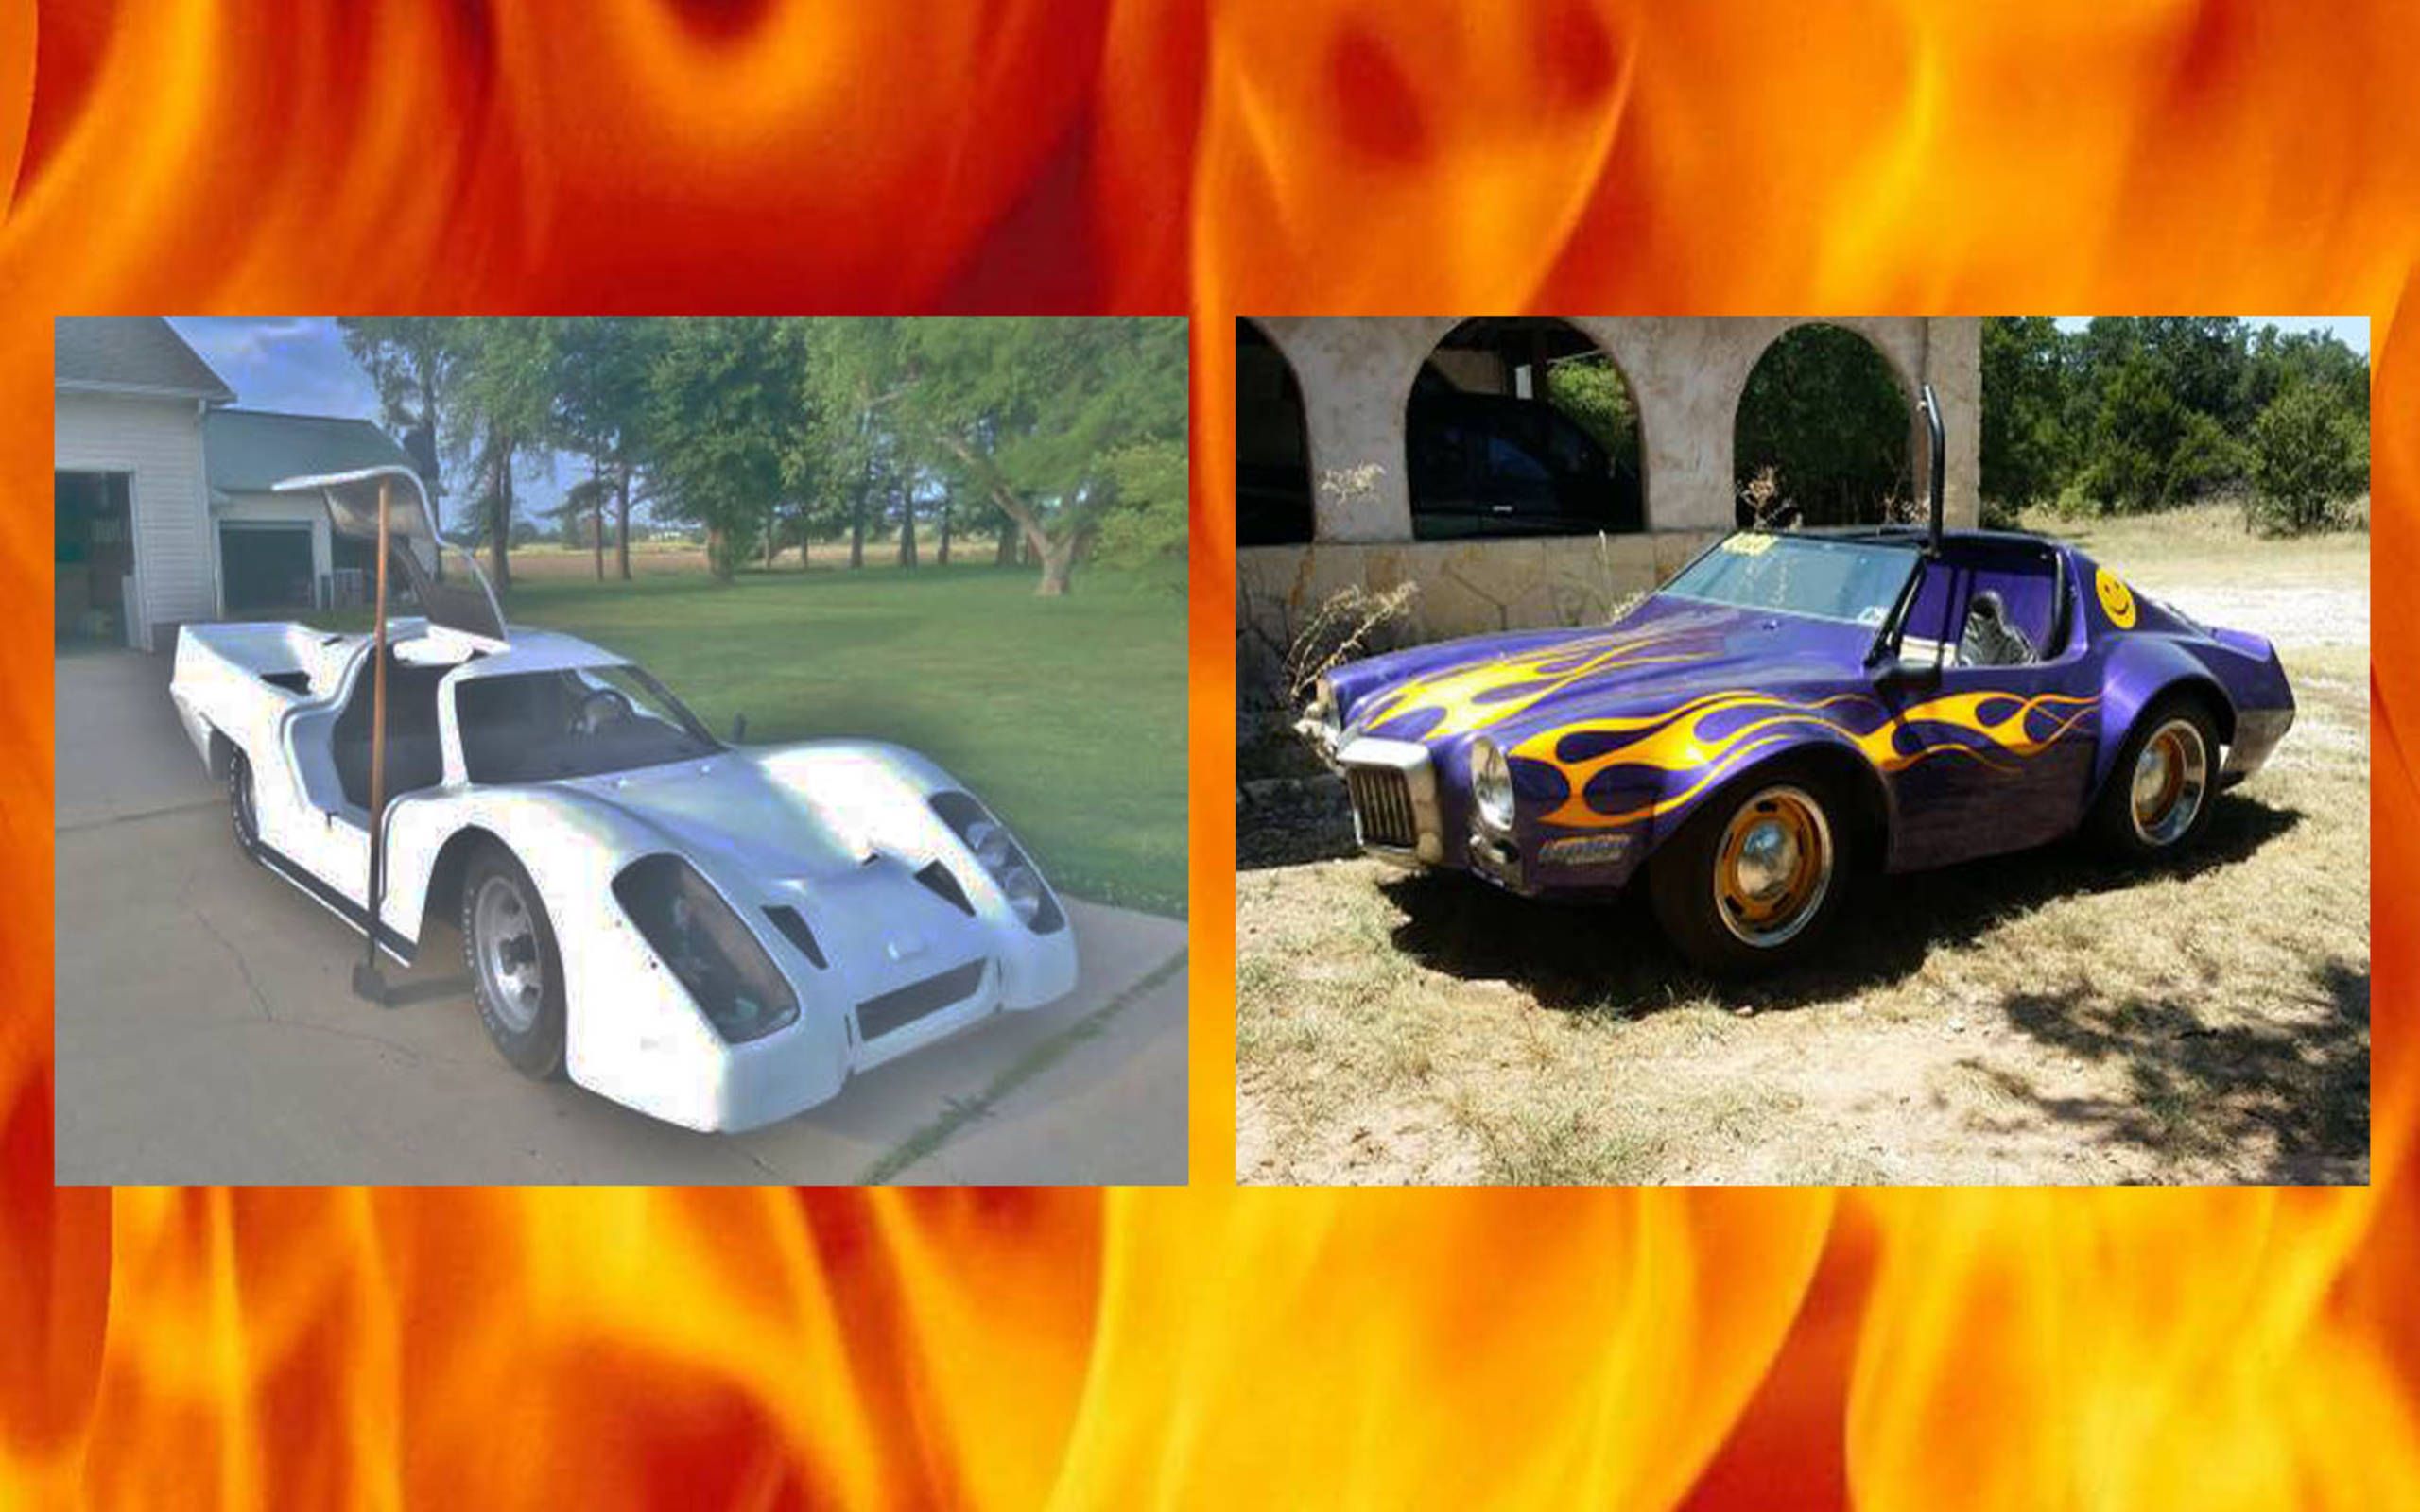 Project Car Hell, VW-Pan-Based Kit Car Edition: Mini-Camaro or Porsche 917?